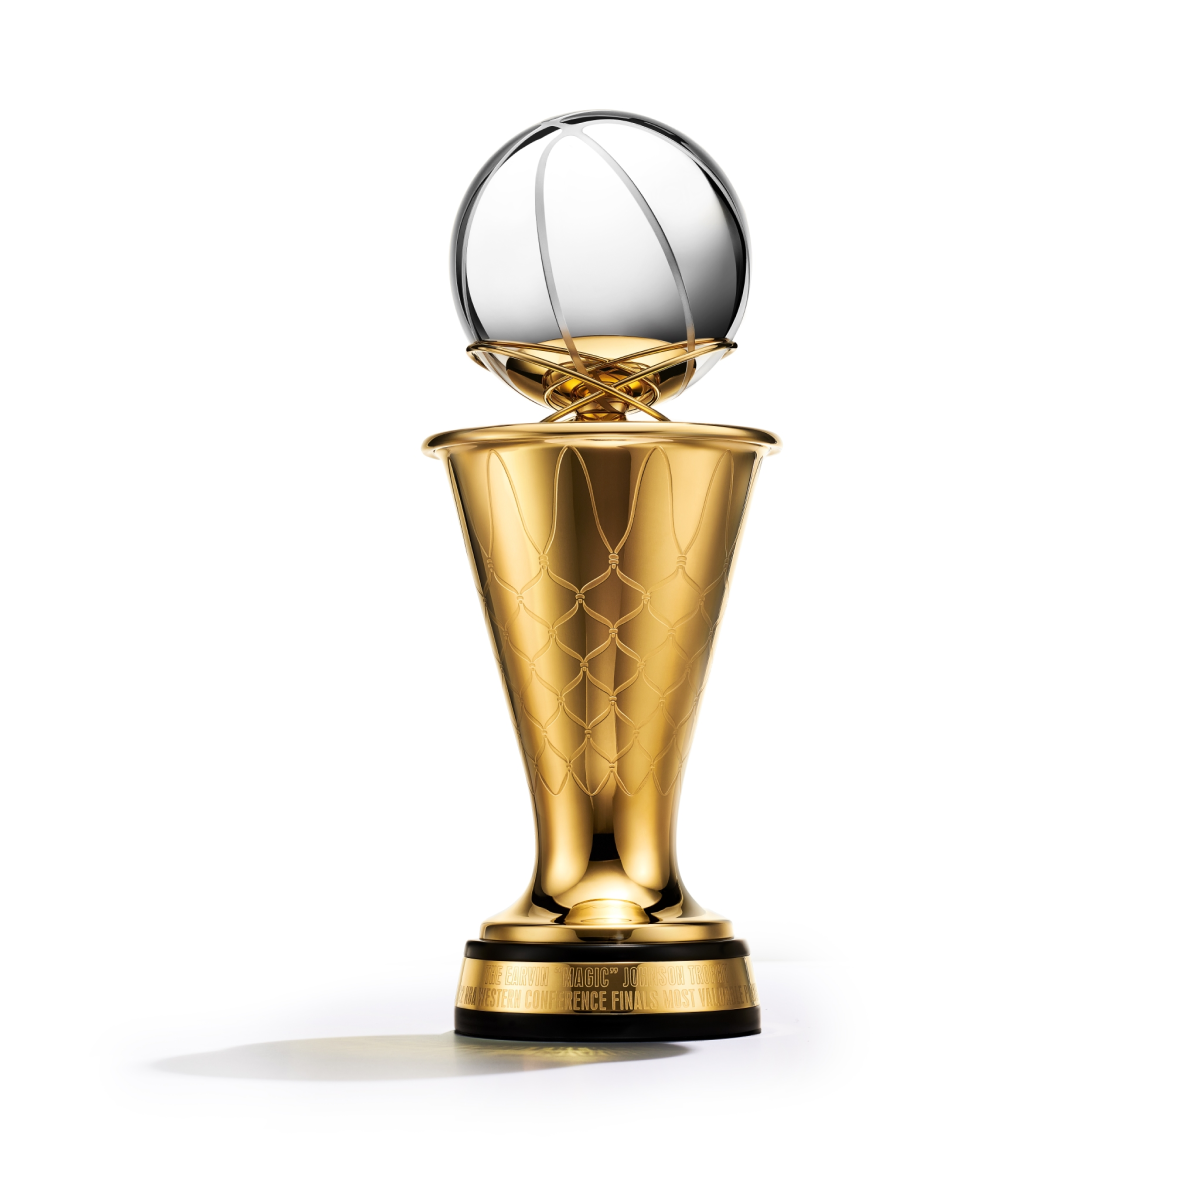 Tiffany & Co. создал новые трофеи для NBA (фото 1)